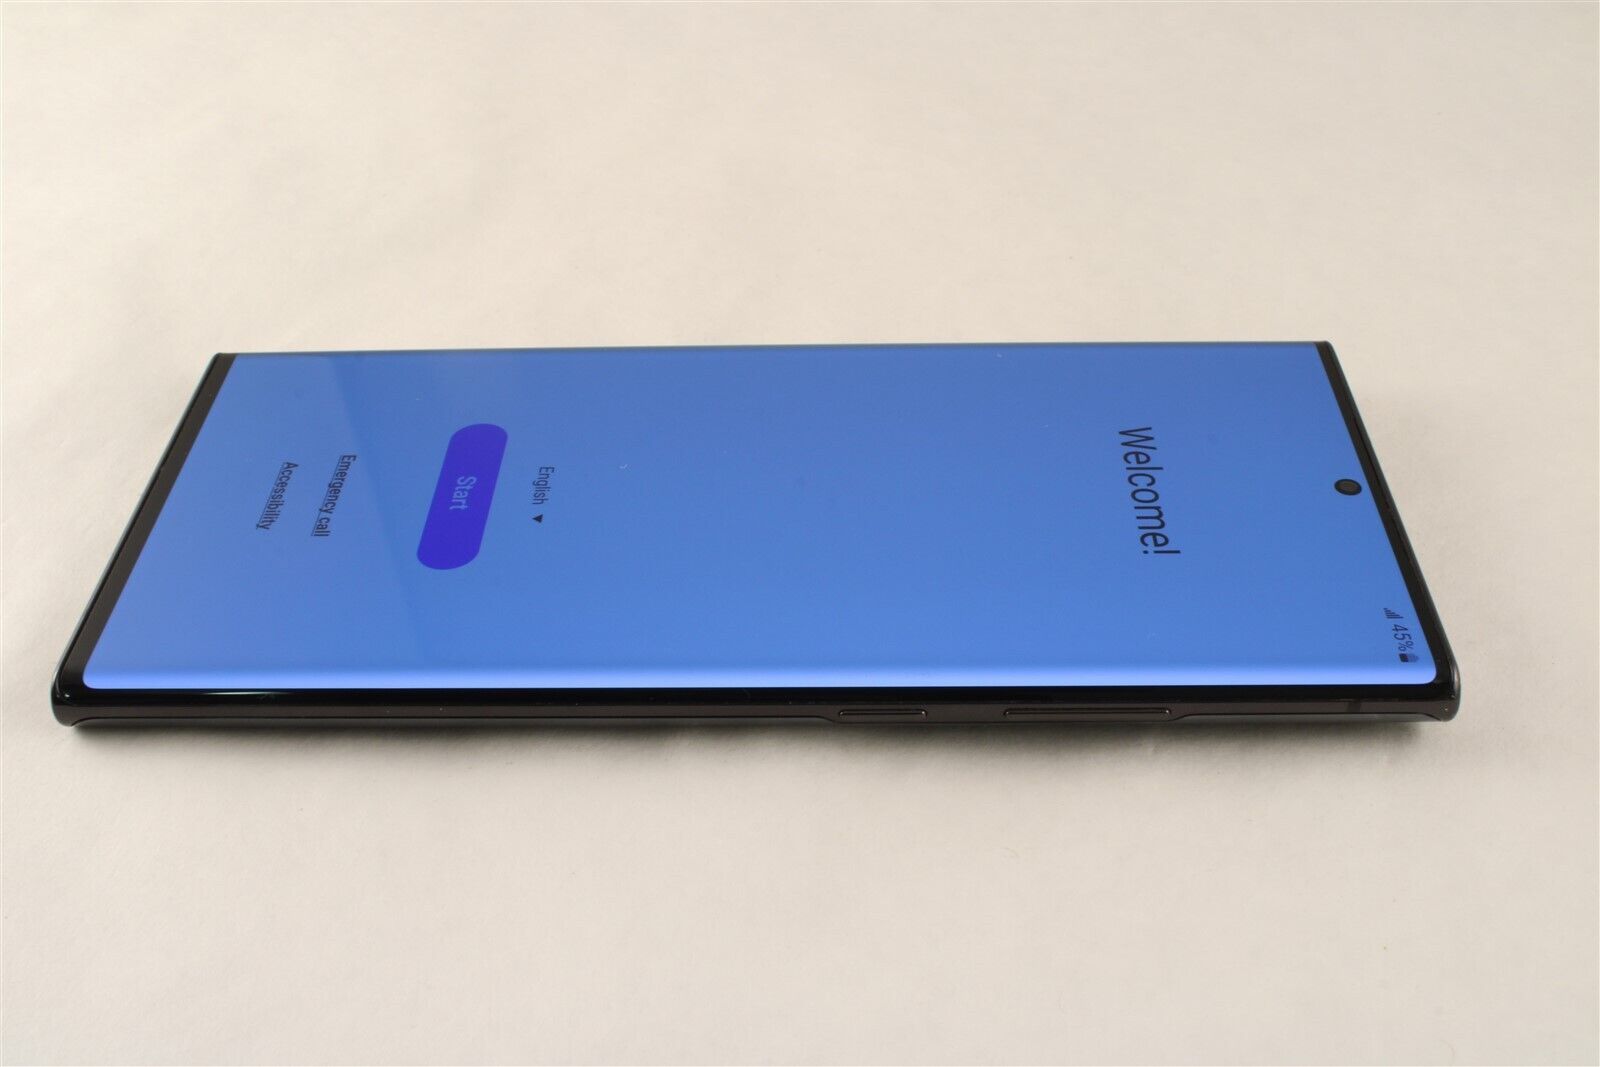 Samsung Galaxy Note20 Ultra 5G 128GB (Unlocked) Mystic Black SM-N986UZKAXAA  - Best Buy